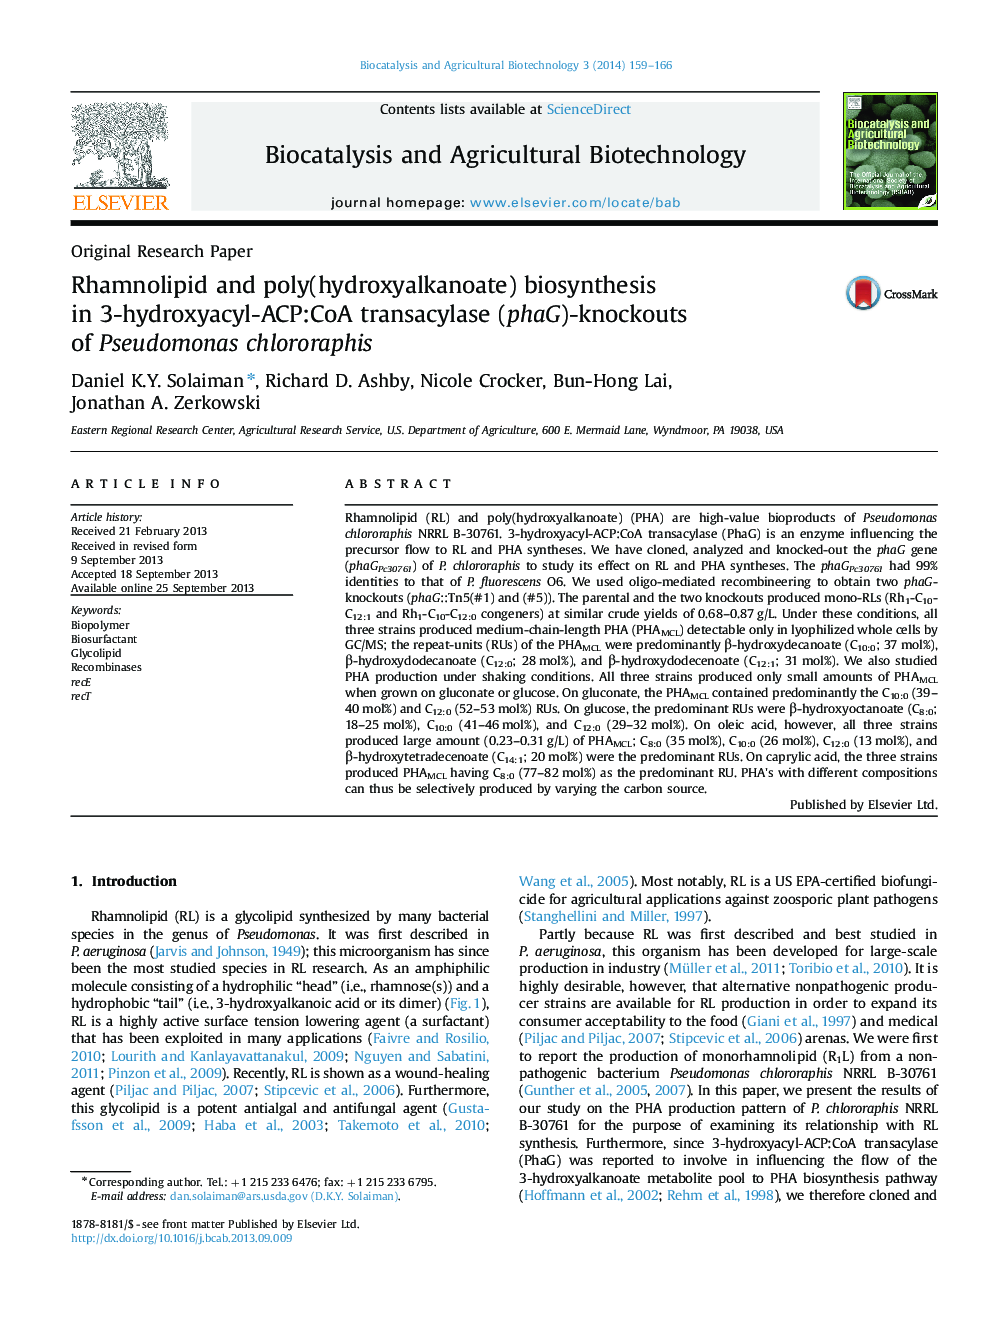 Rhamnolipid and poly(hydroxyalkanoate) biosynthesis in 3-hydroxyacyl-ACP:CoA transacylase (phaG)-knockouts of Pseudomonas chlororaphis